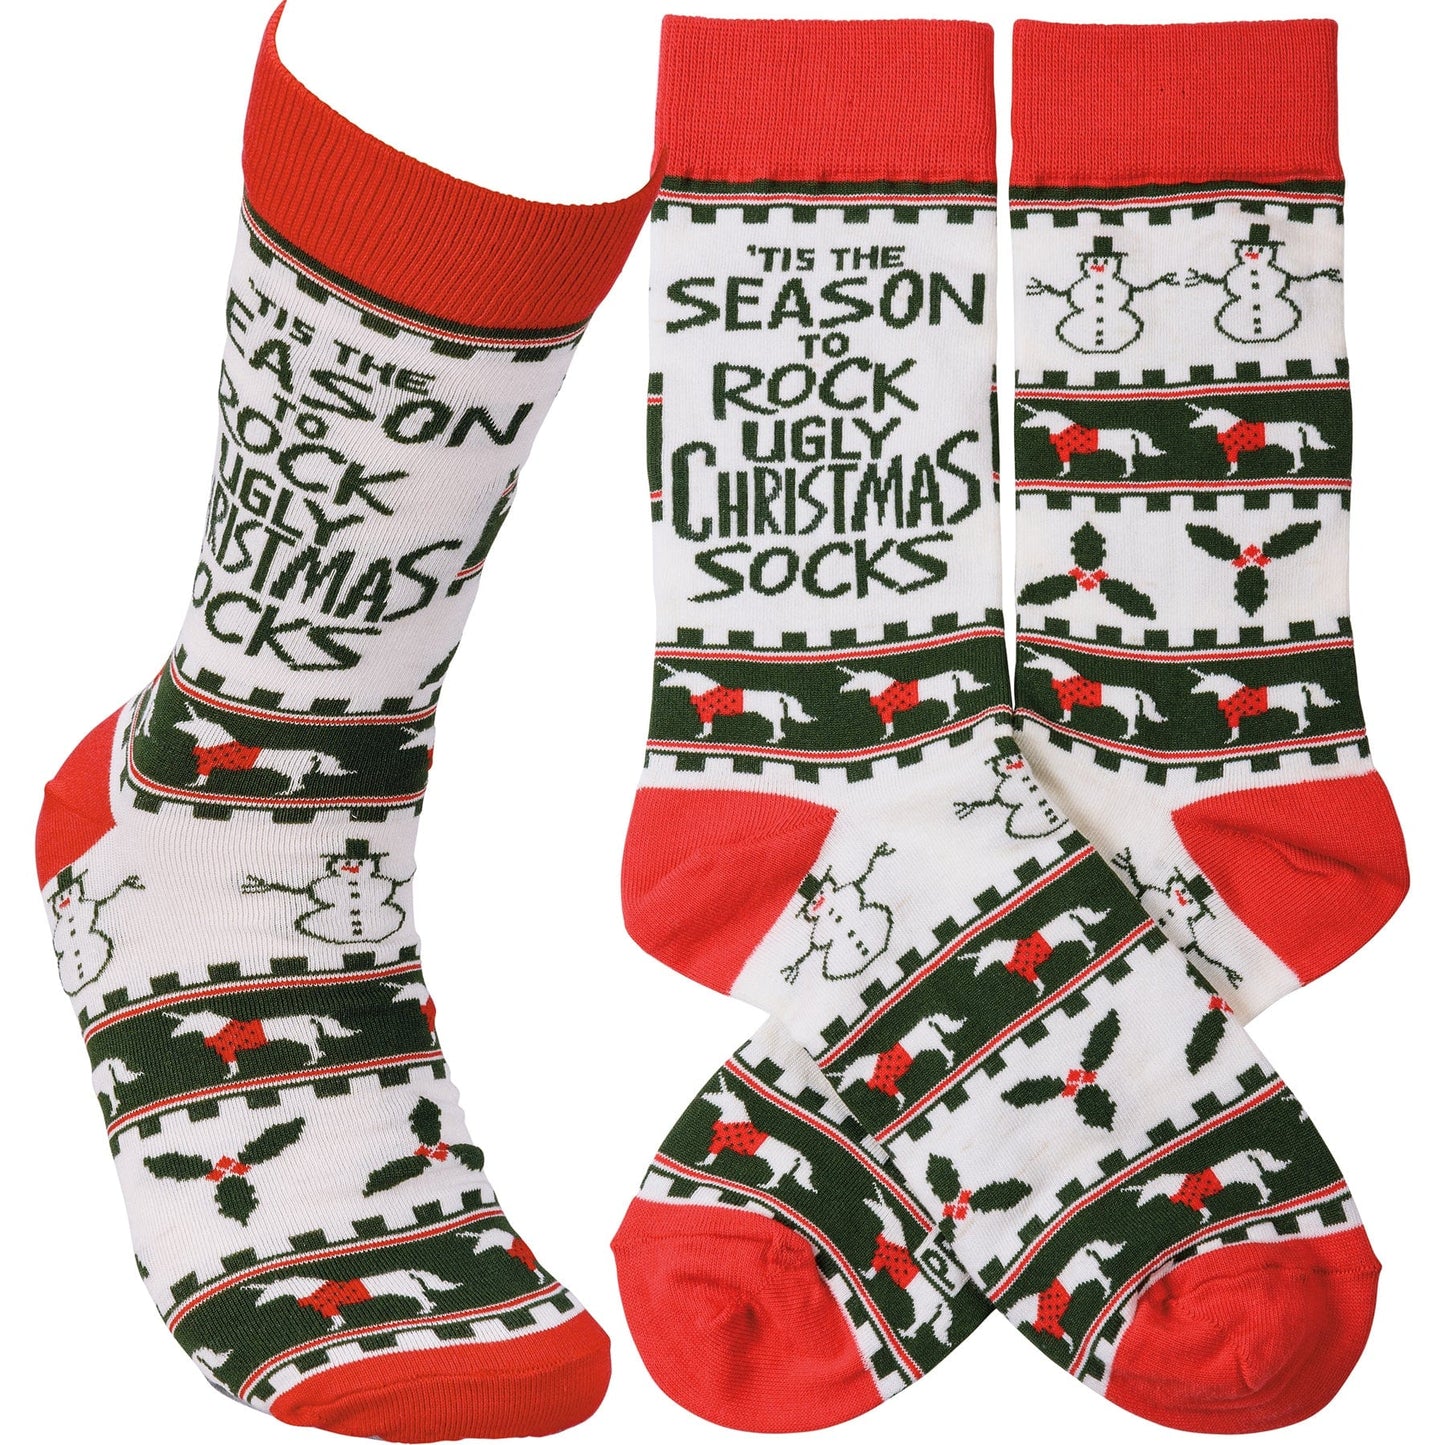 Socks One Size Fits Most Socks - Season To Rock The Ugly Christmas Socks PBK-113516